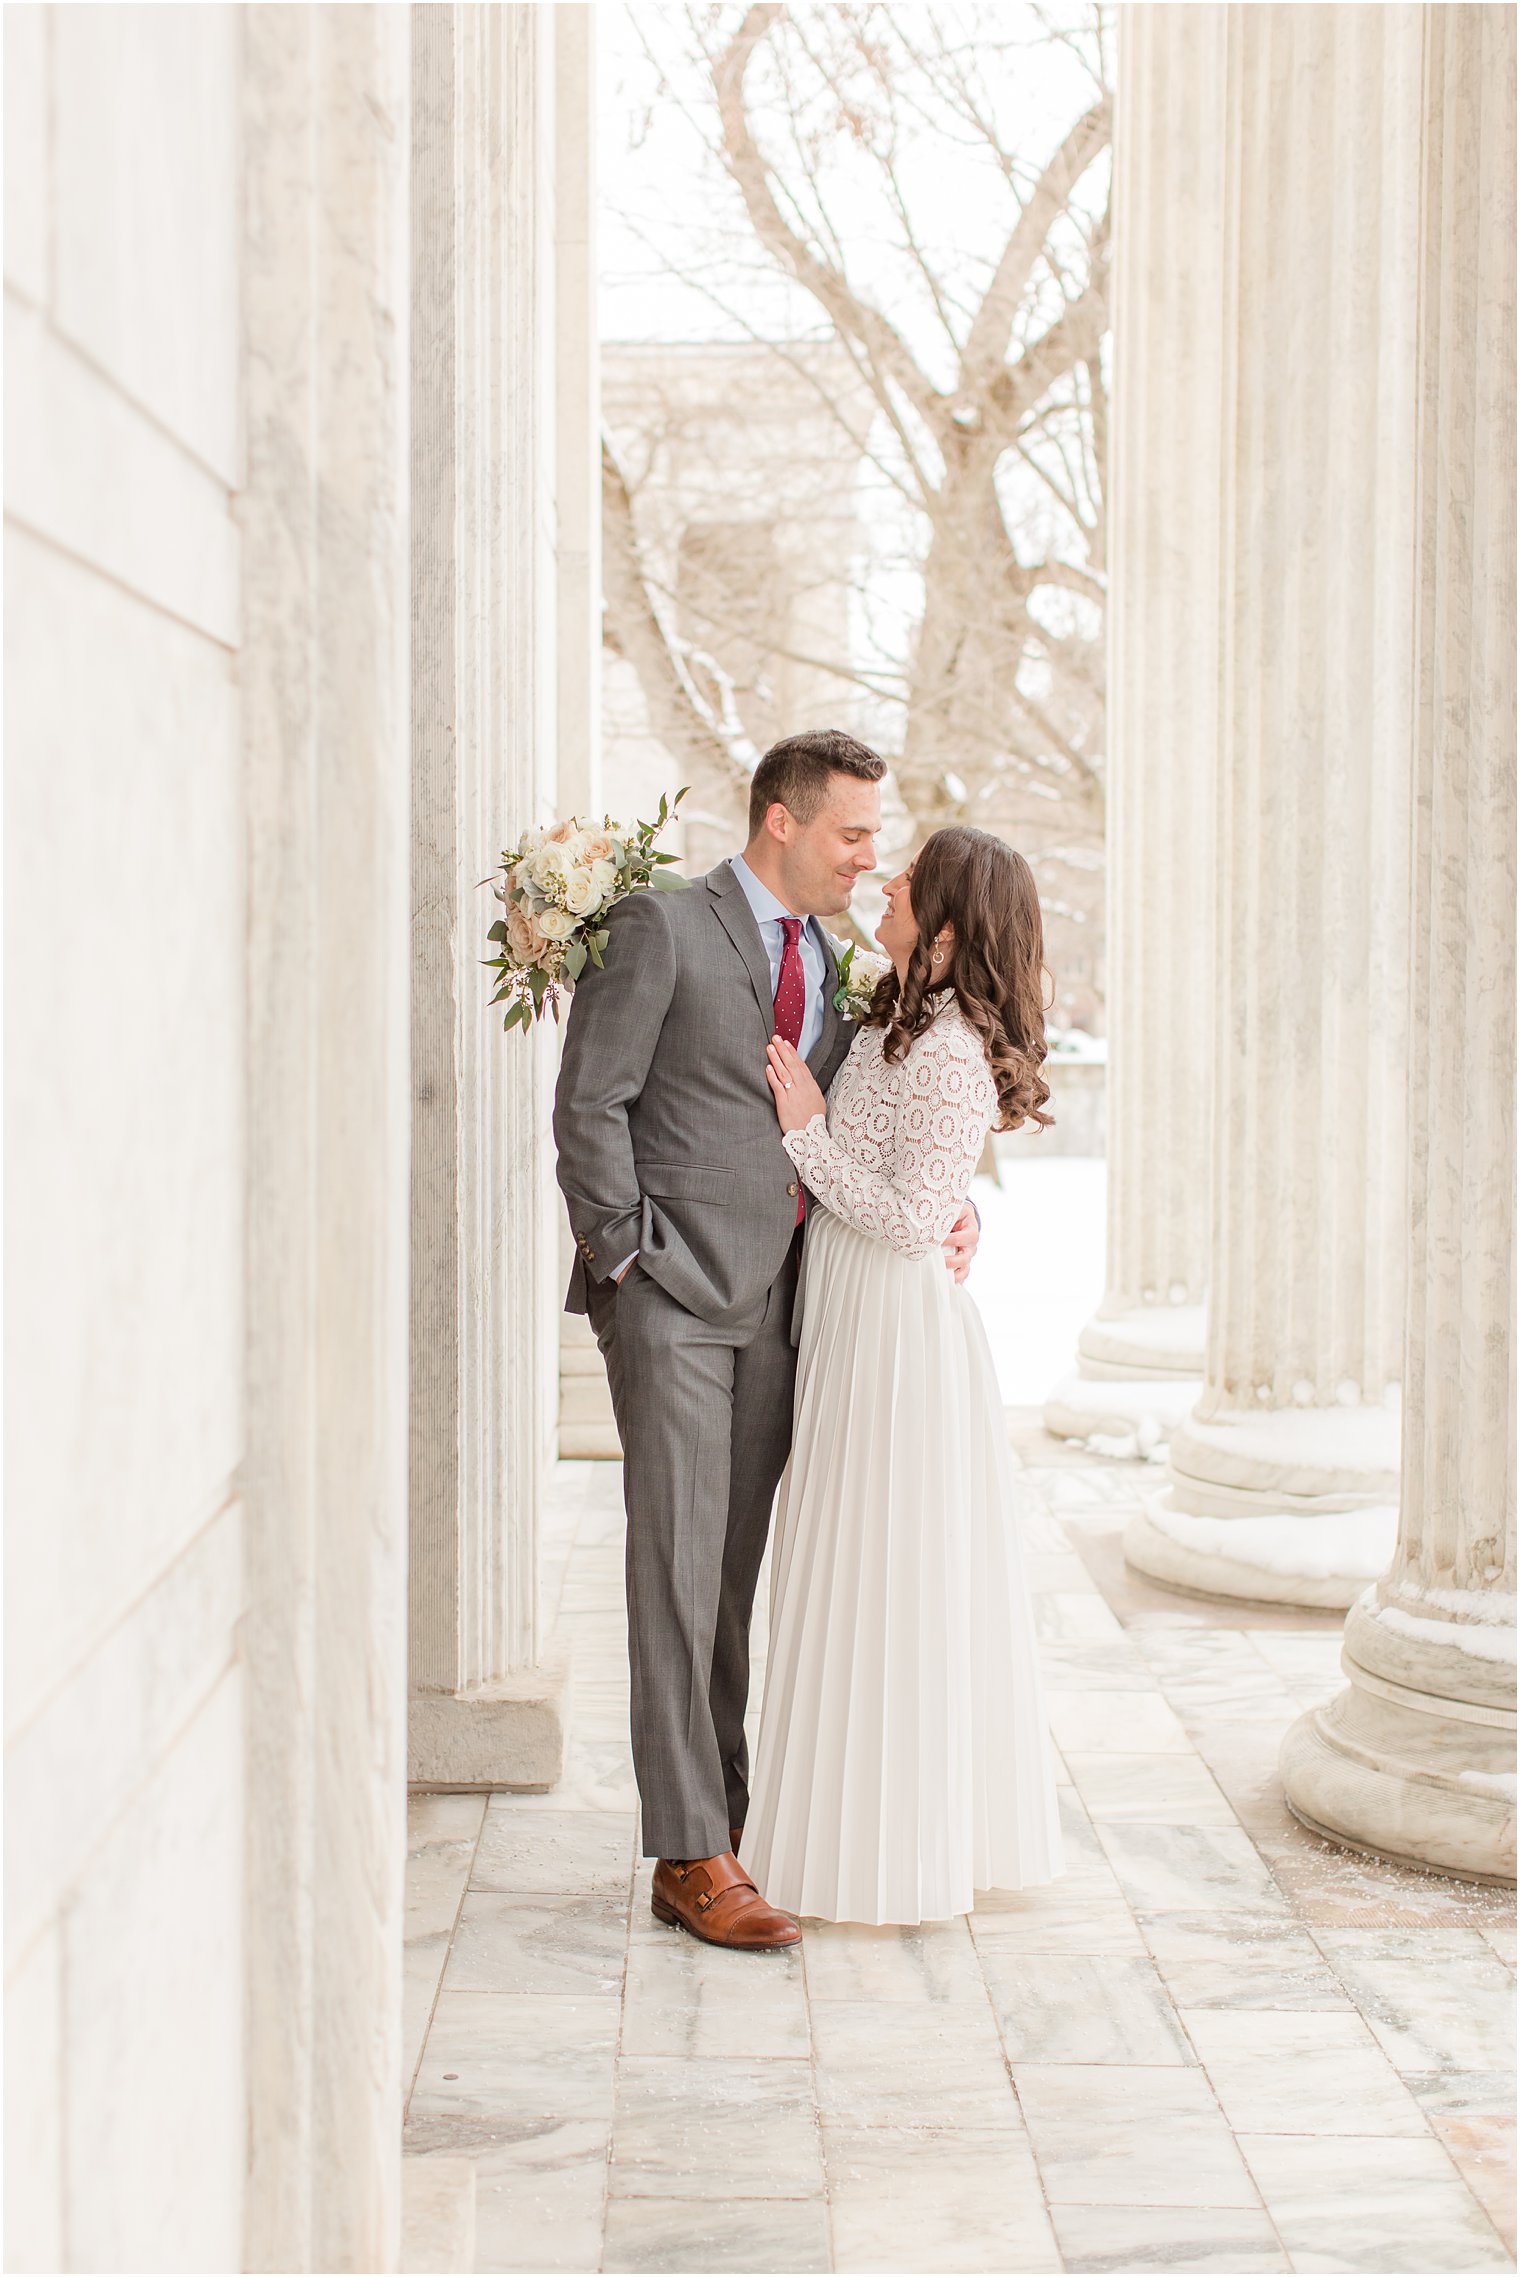 bride and groom hug between pillars at Princeton University building on snowy day